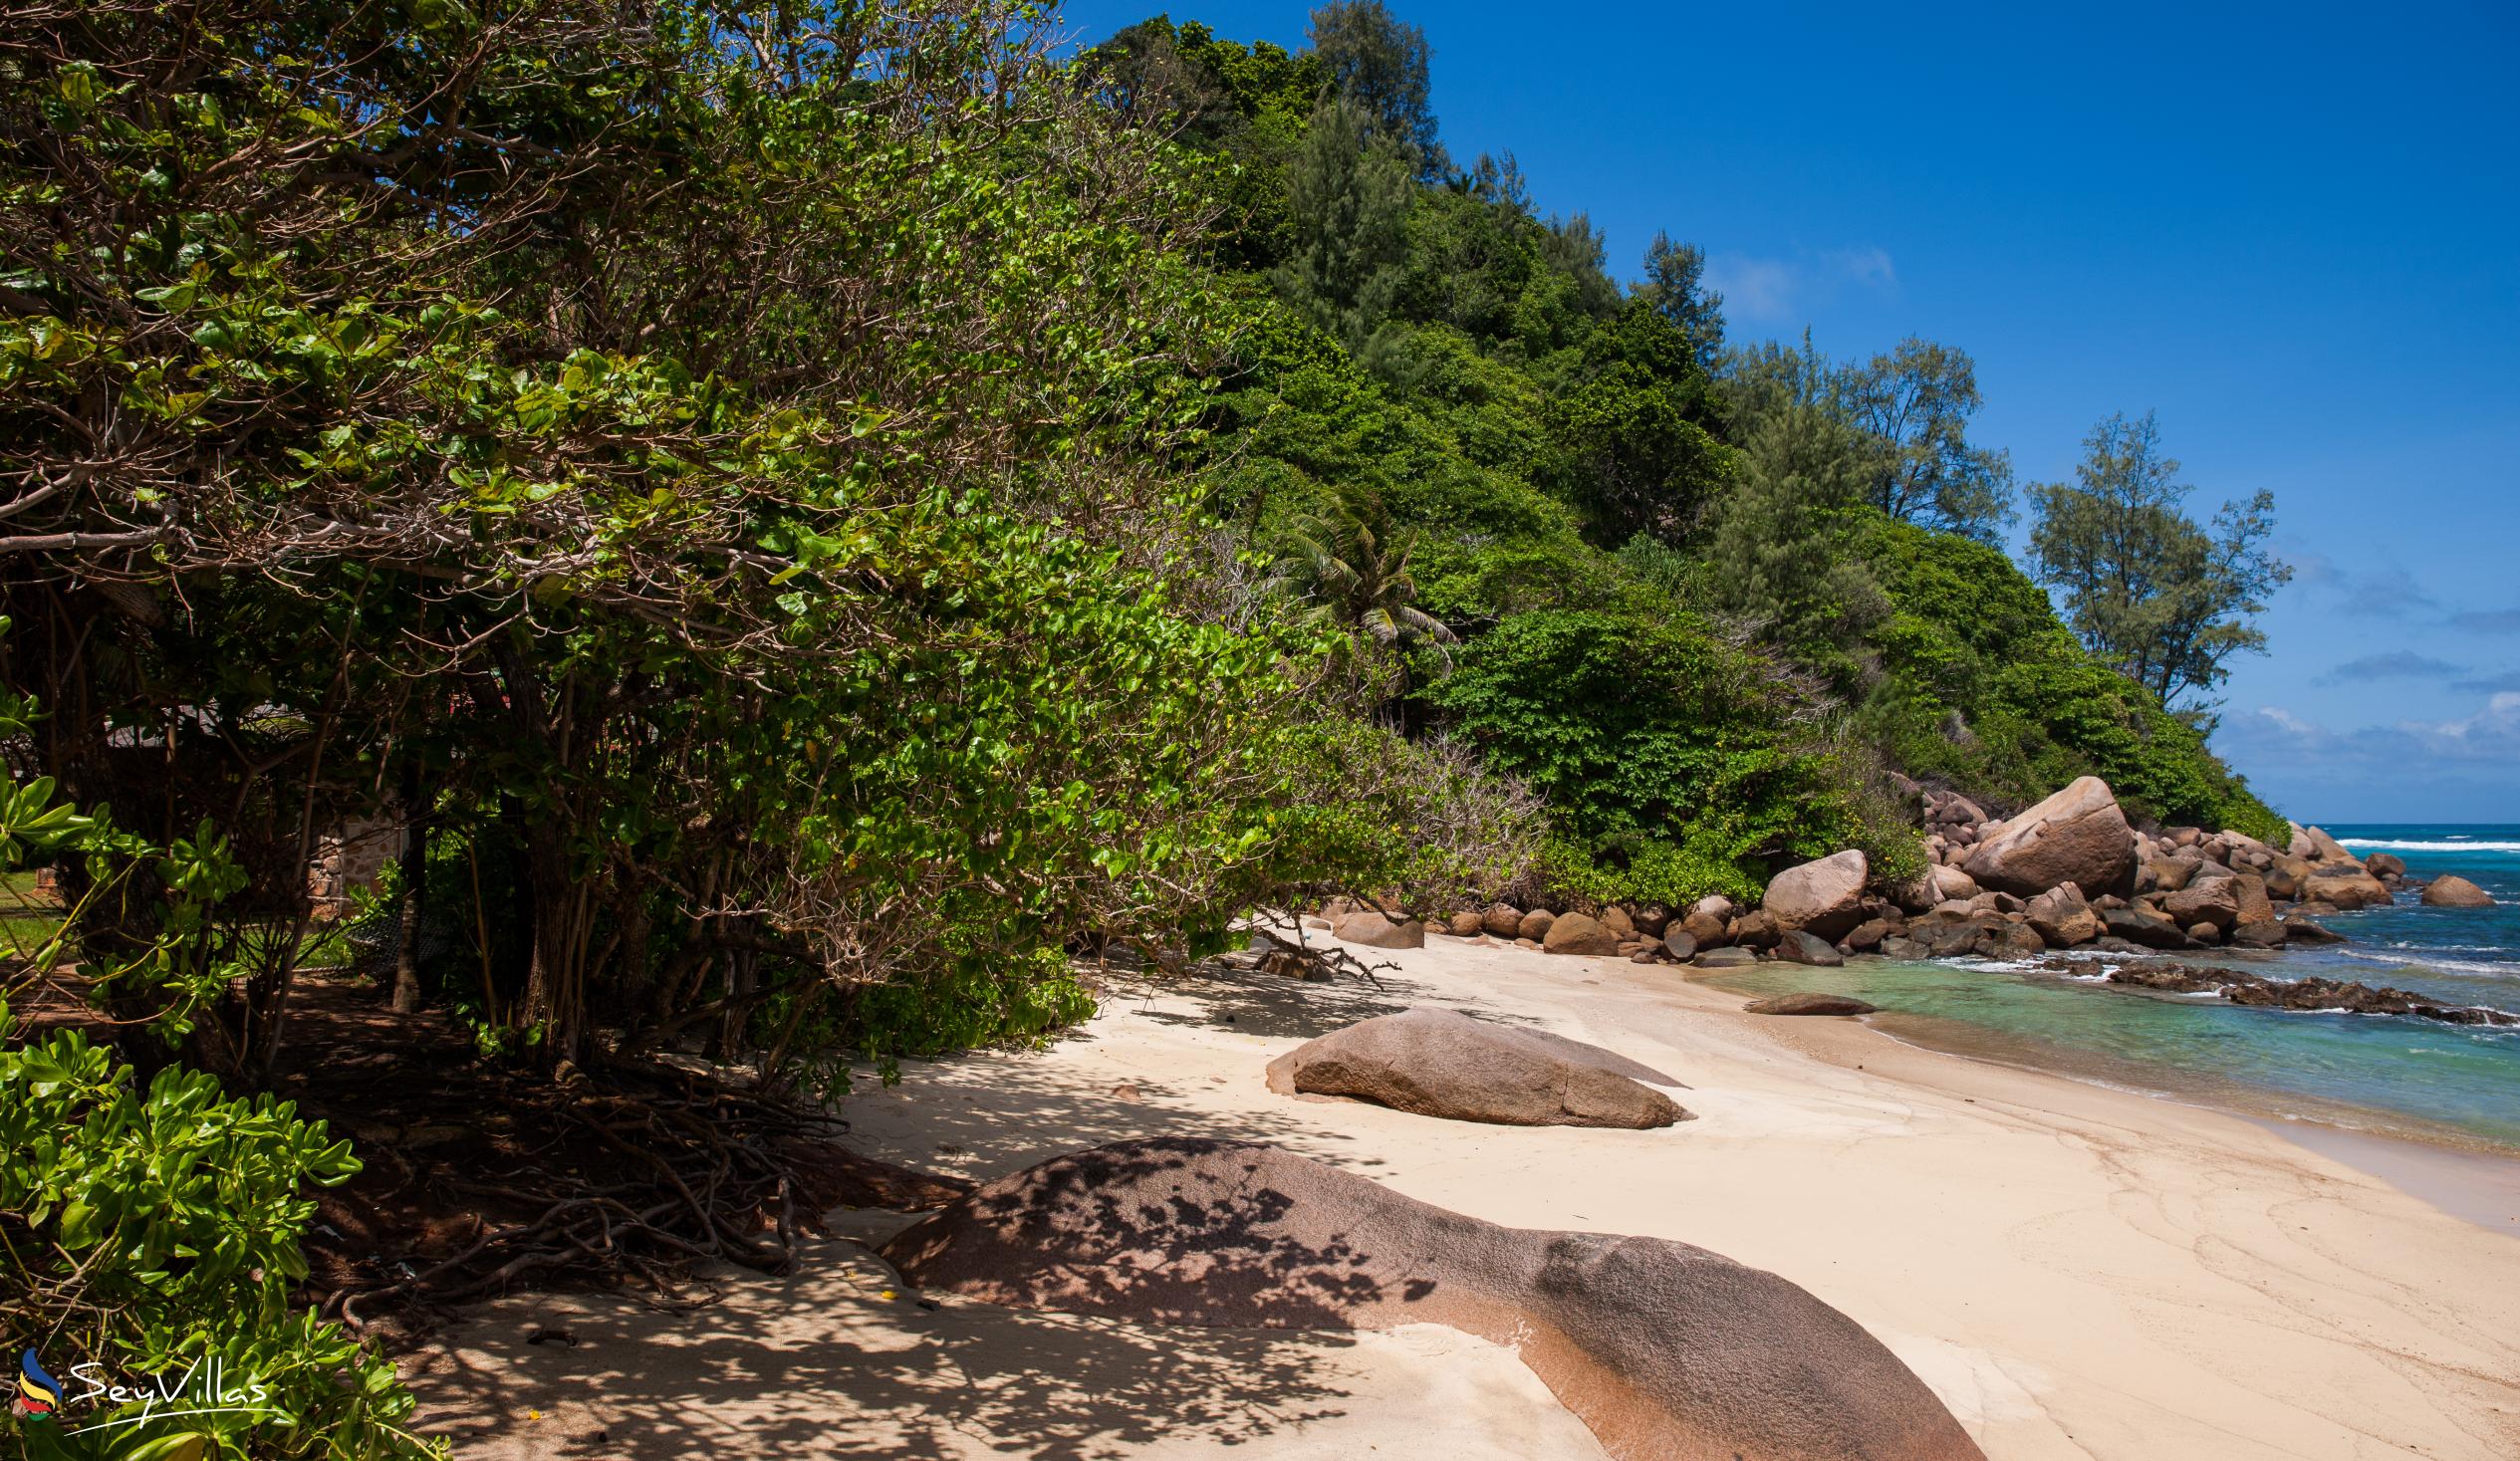 Photo 8: Anse Consolation - Praslin (Seychelles)